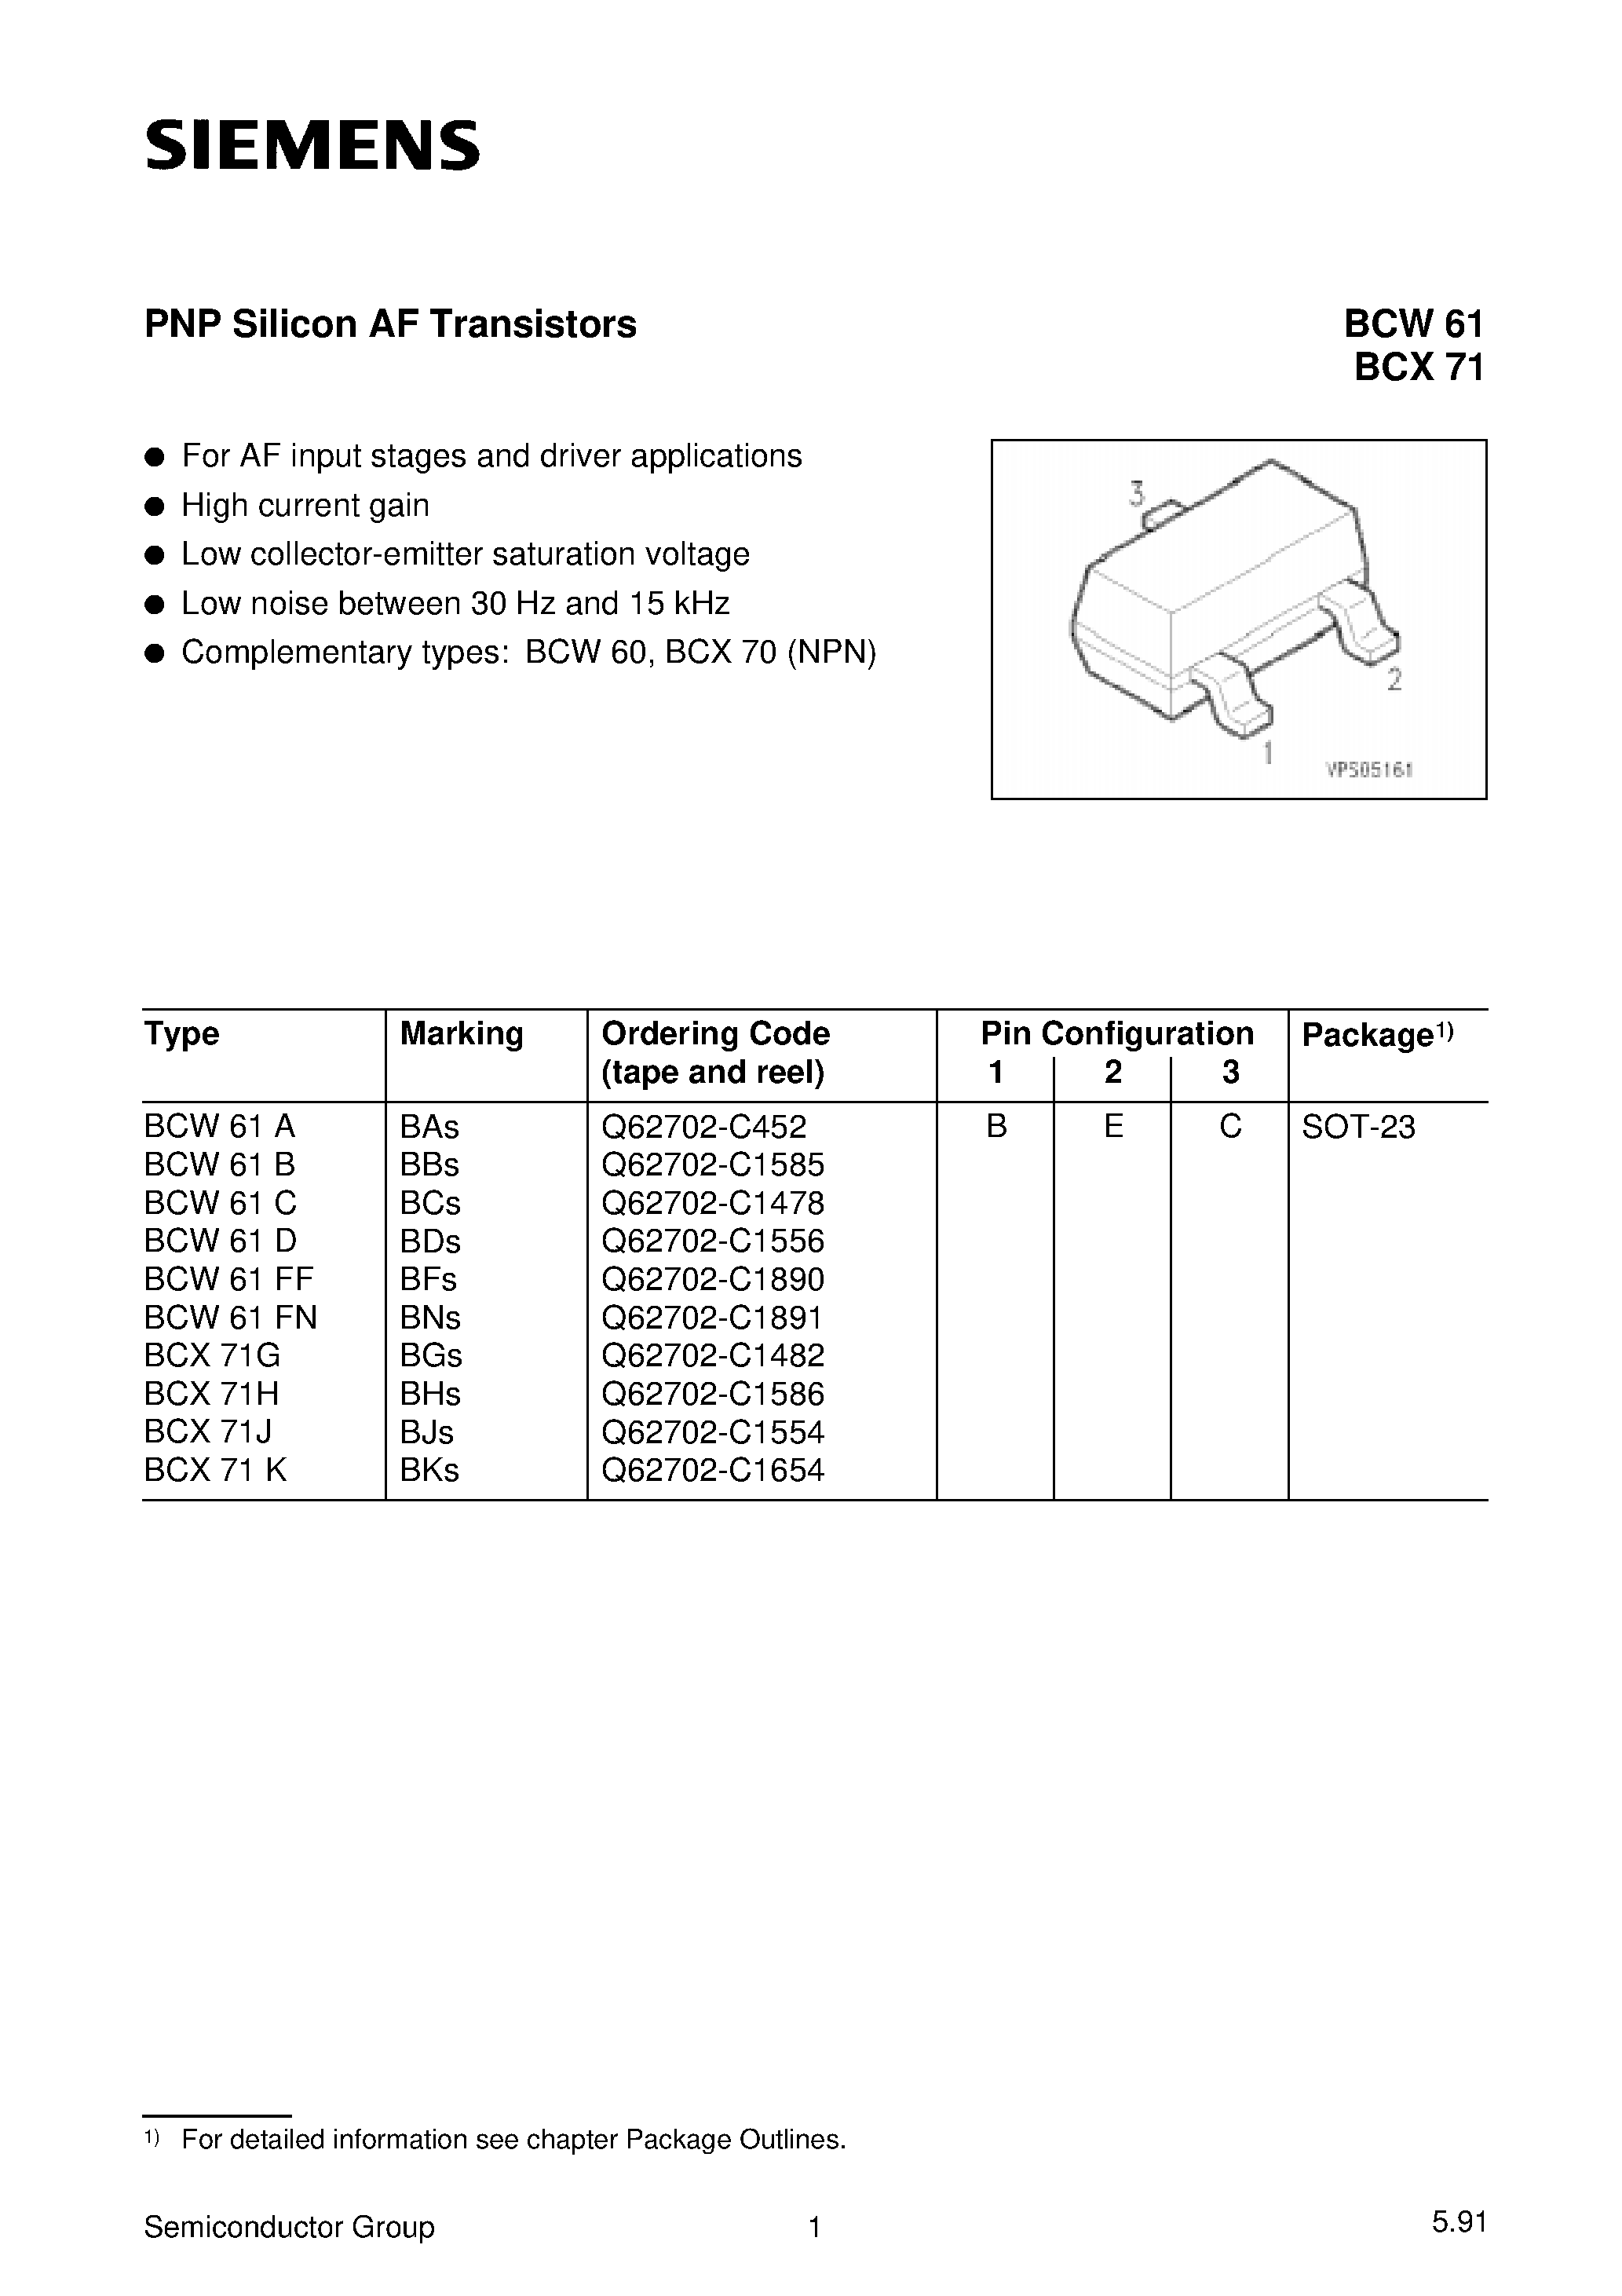 Datasheet BCX71J - PNP Silicon AF Transistors (For AF input stages and driver applications High current gain) page 1